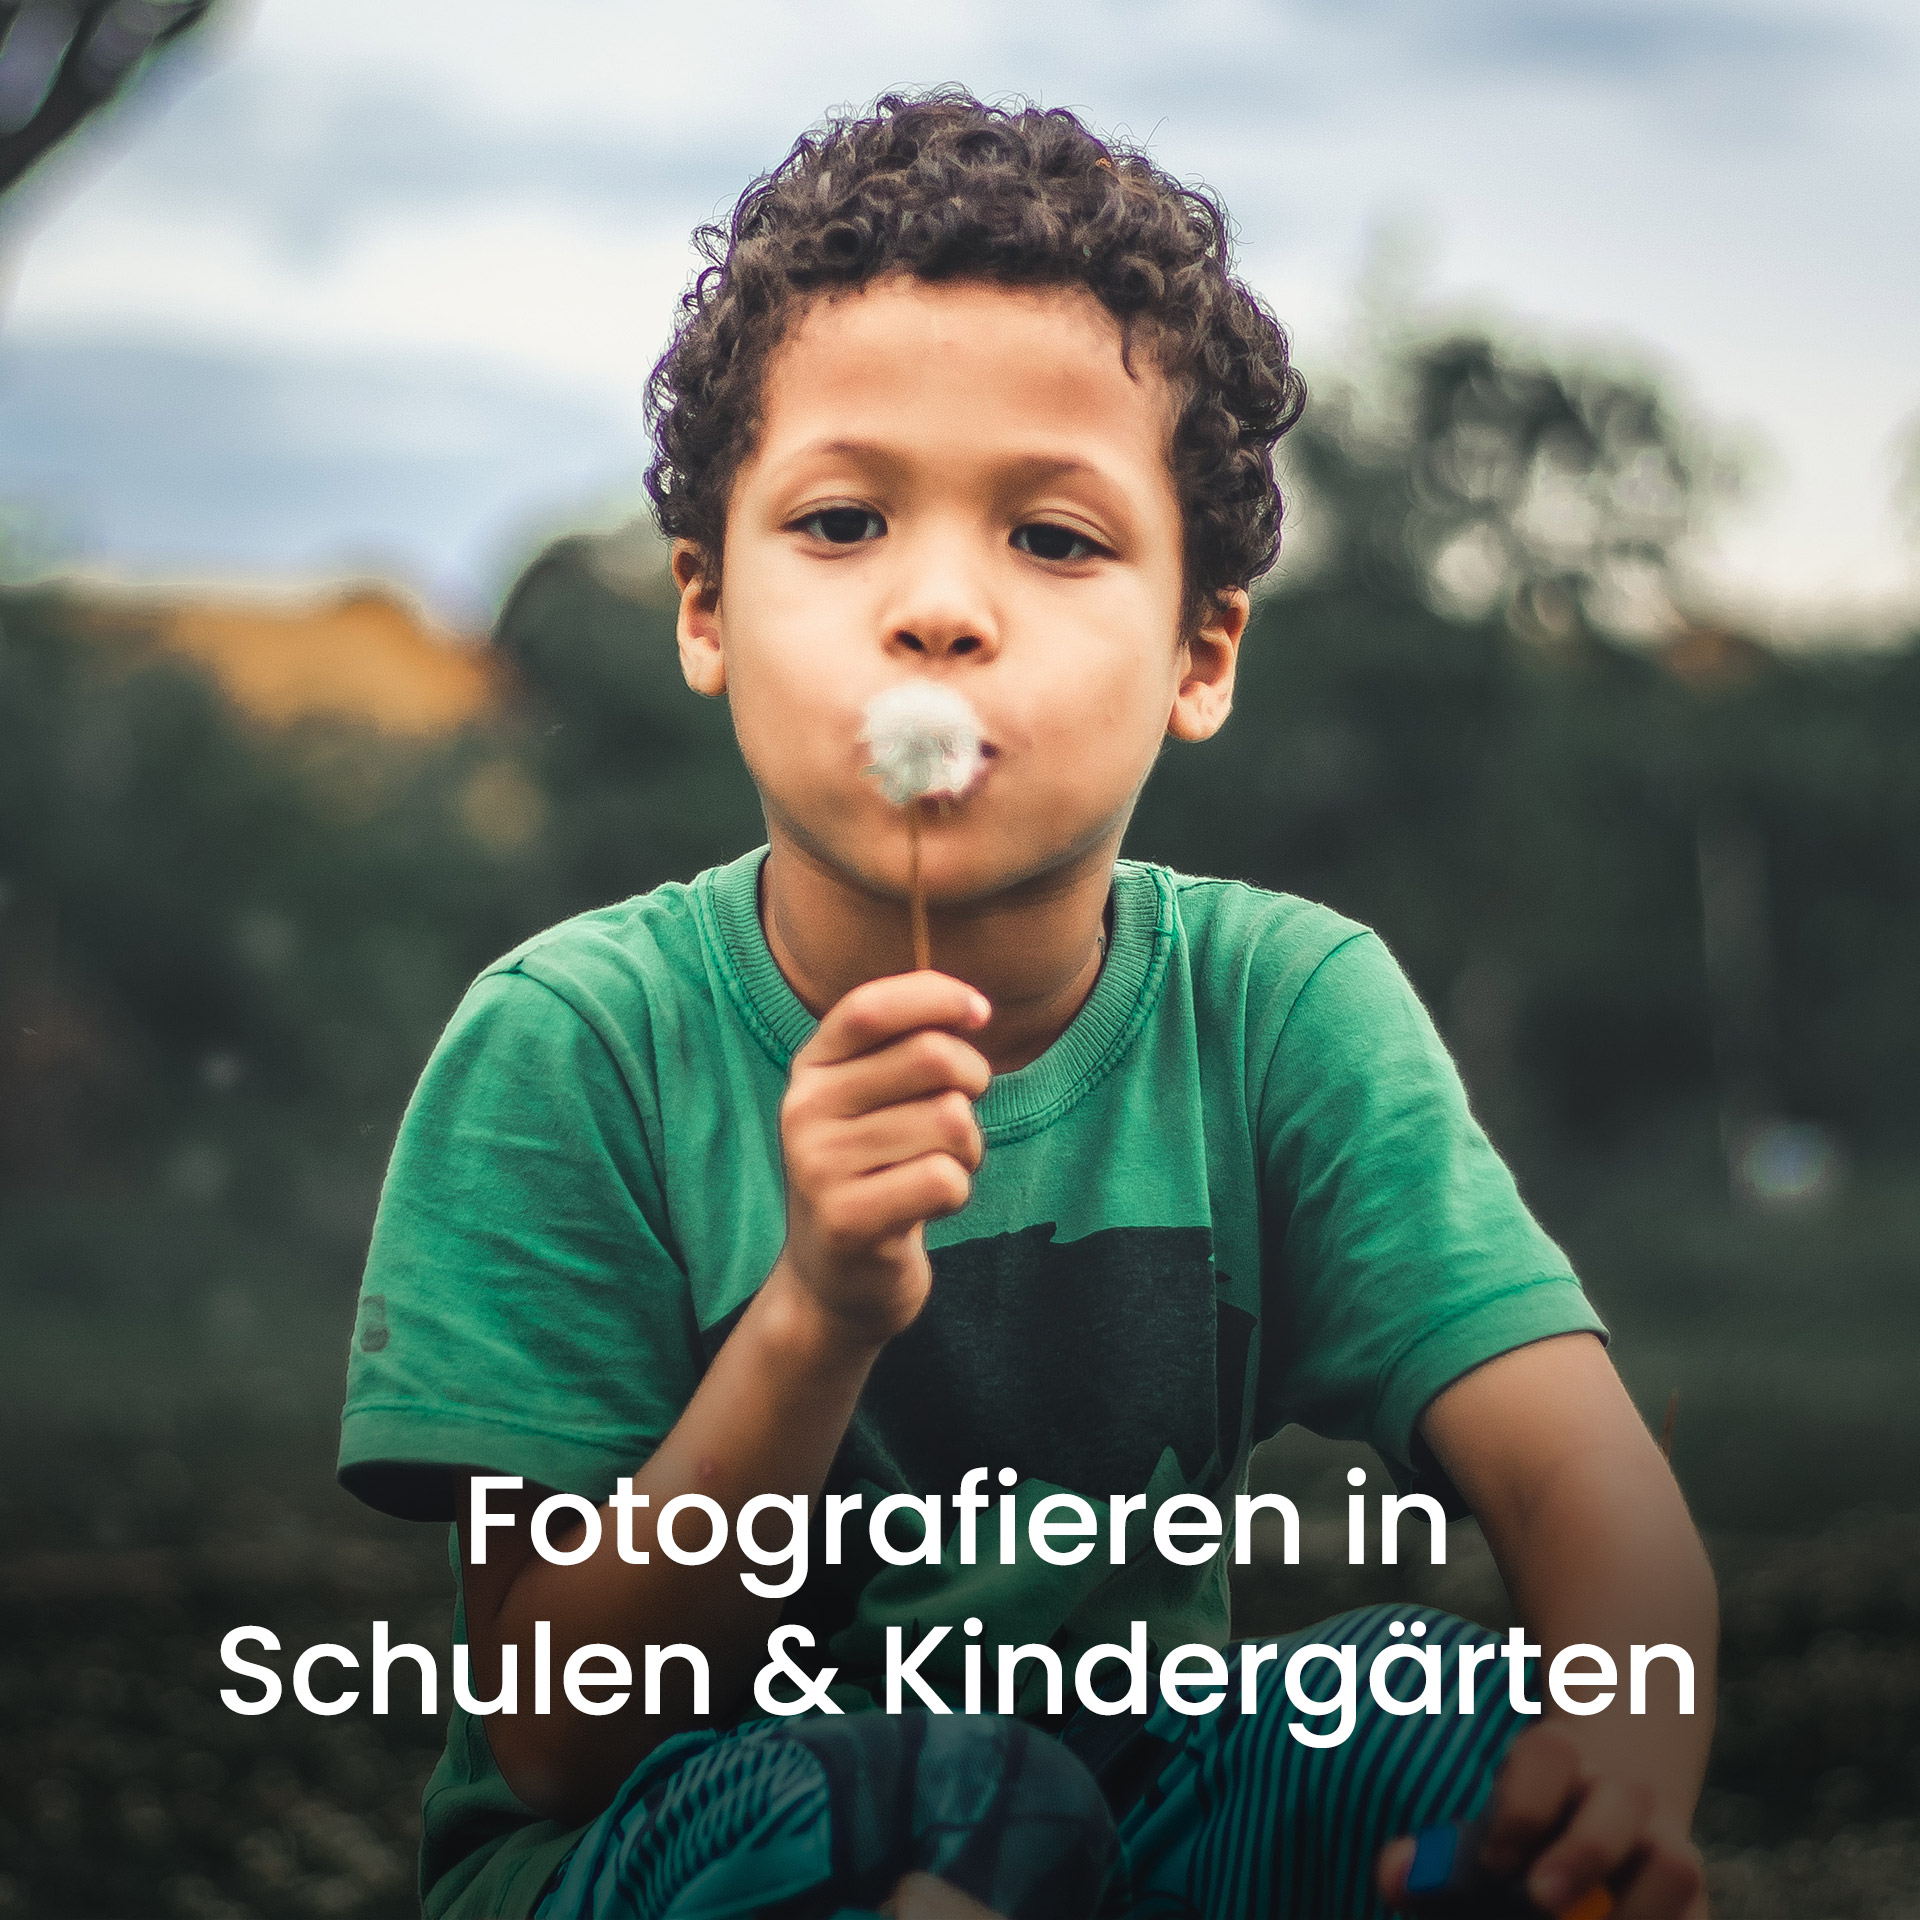 Fotografieren in Schulen & Kindergärten